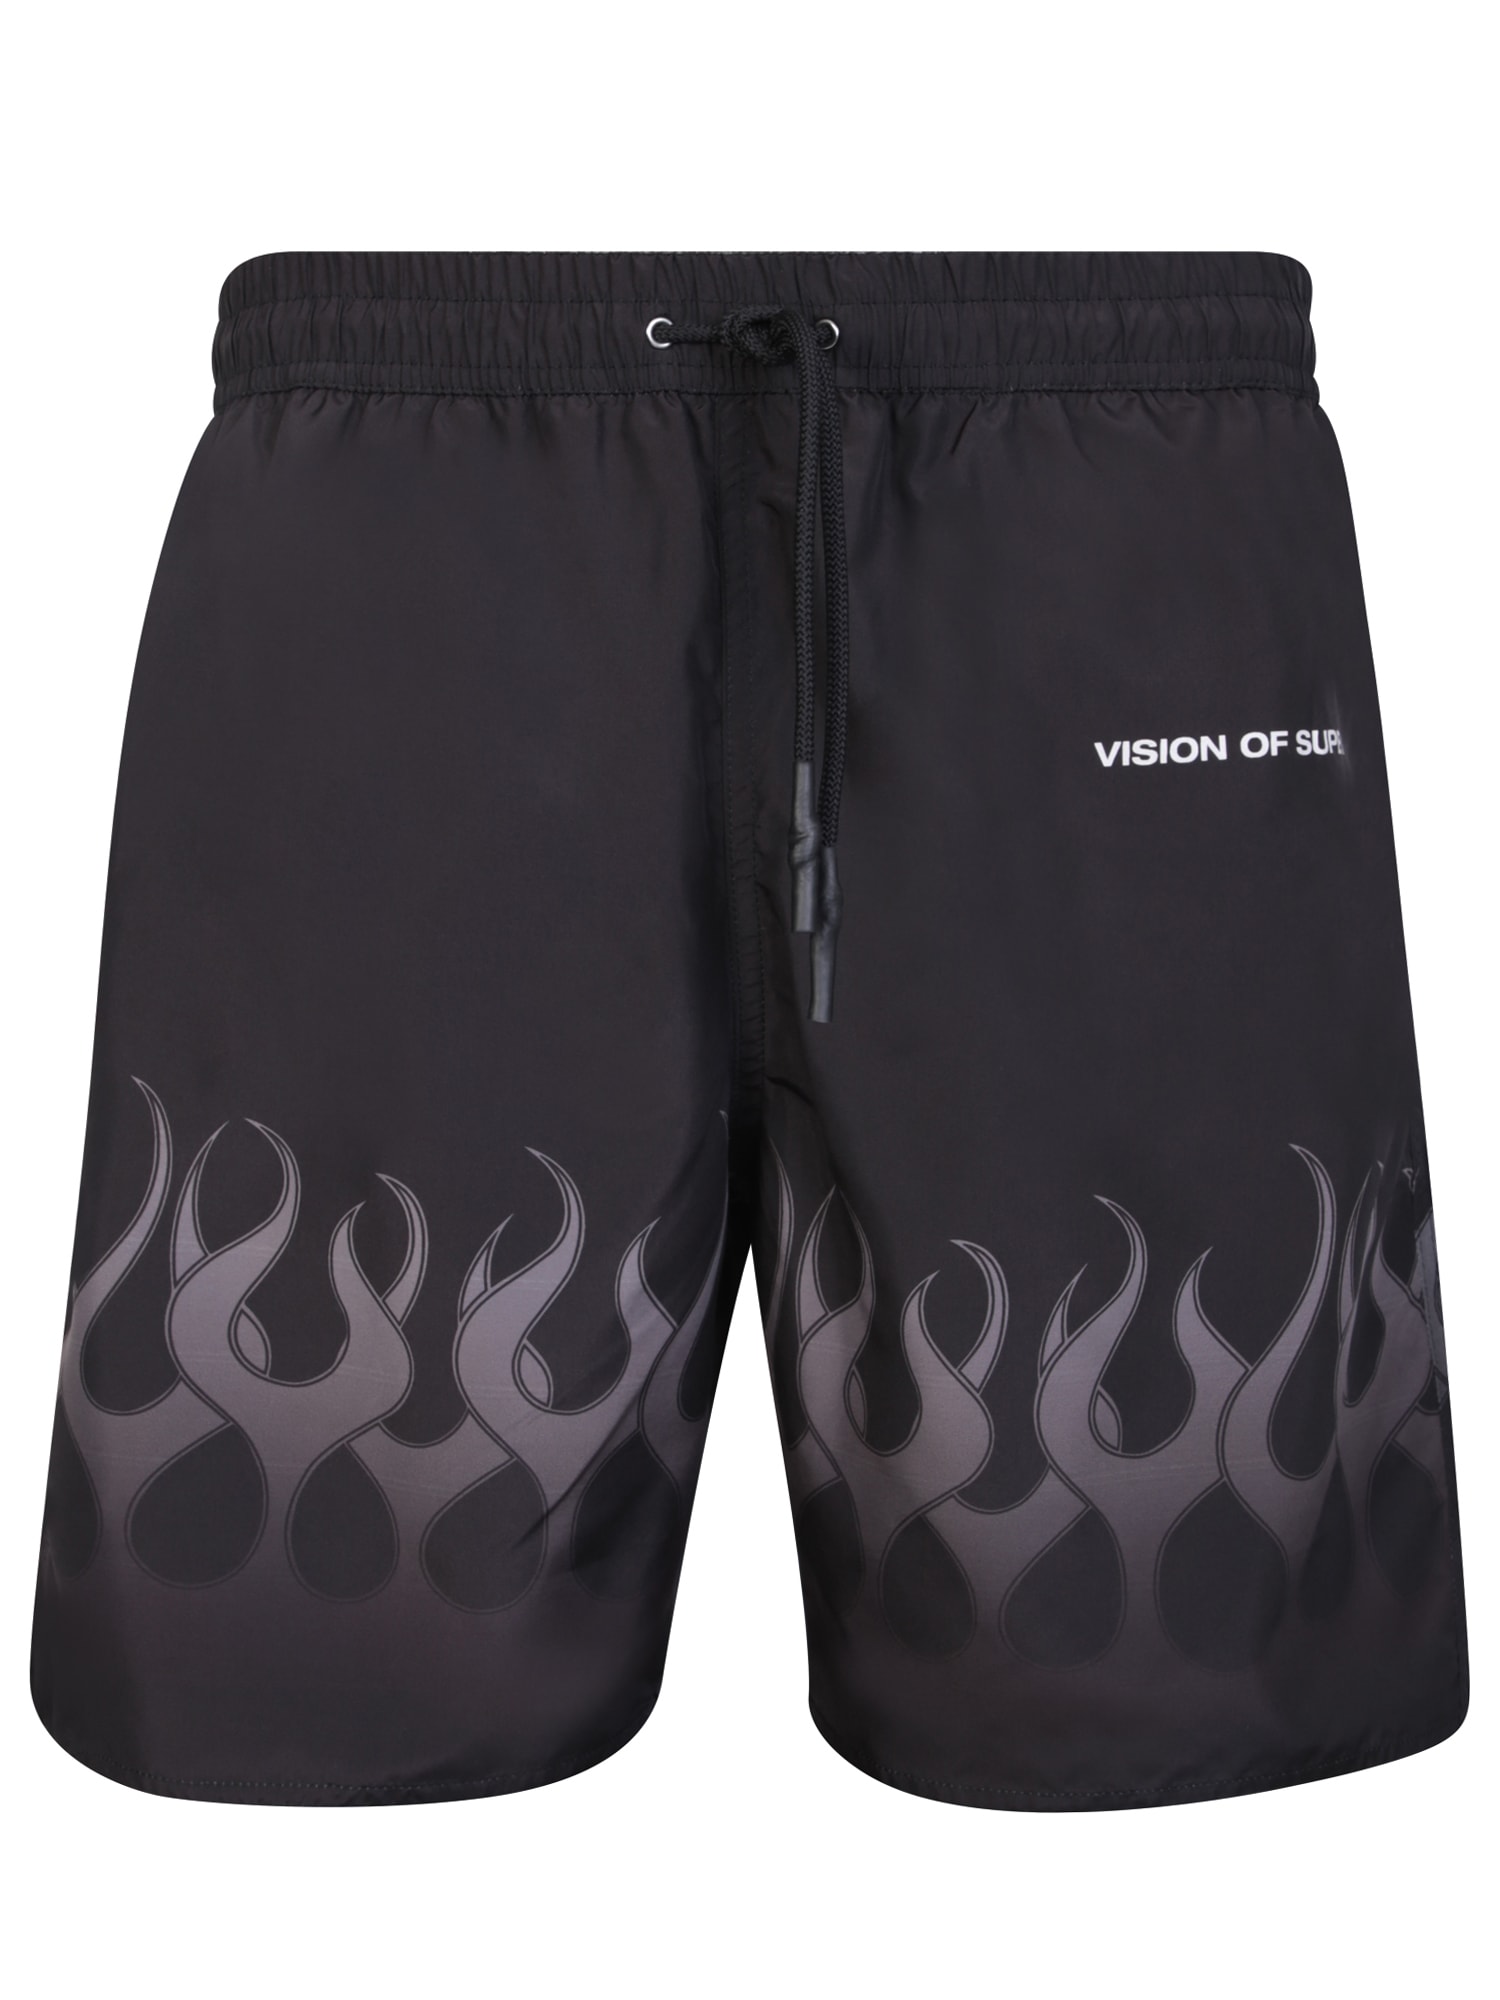 Vision of Super Black/gray Flames Swim Shorts